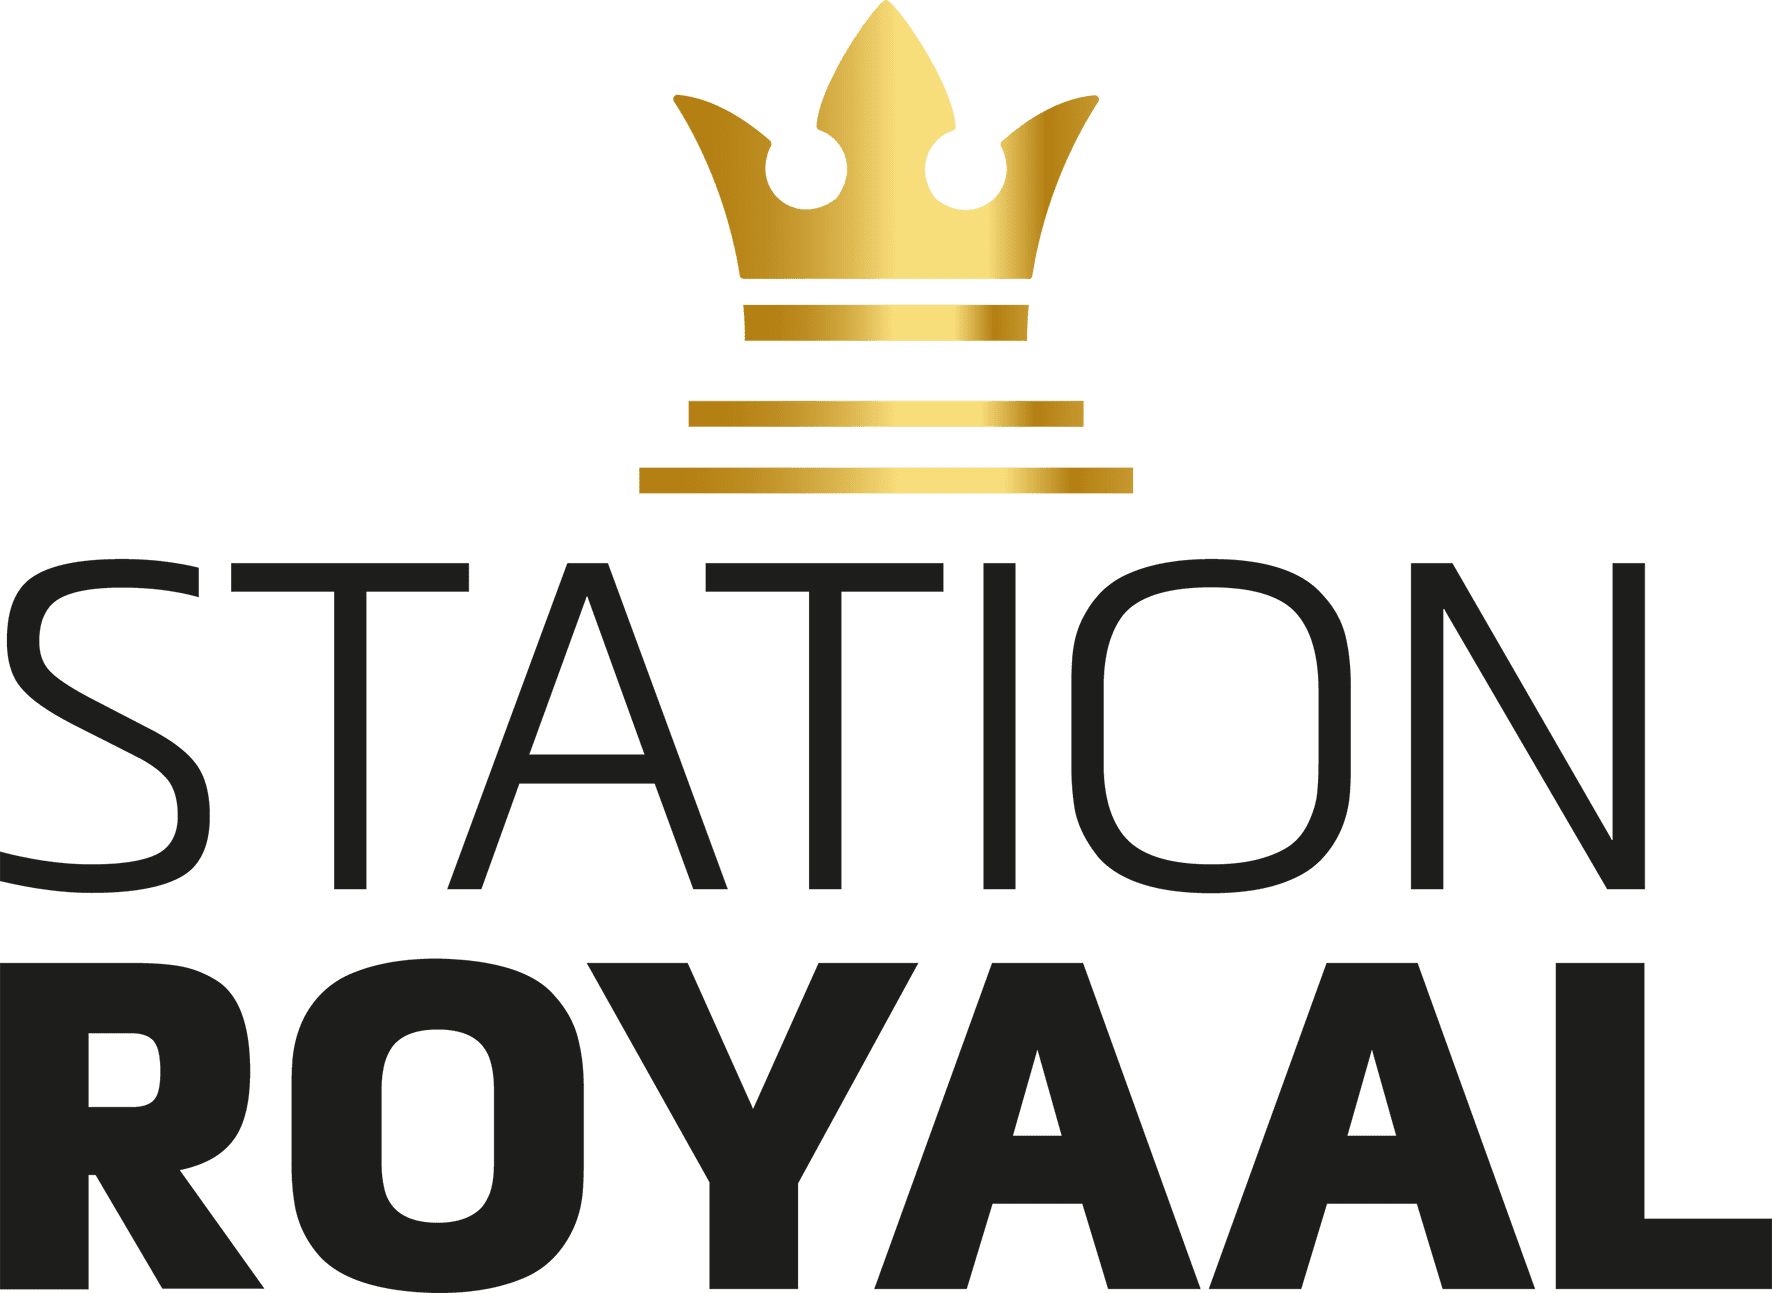 station royaal